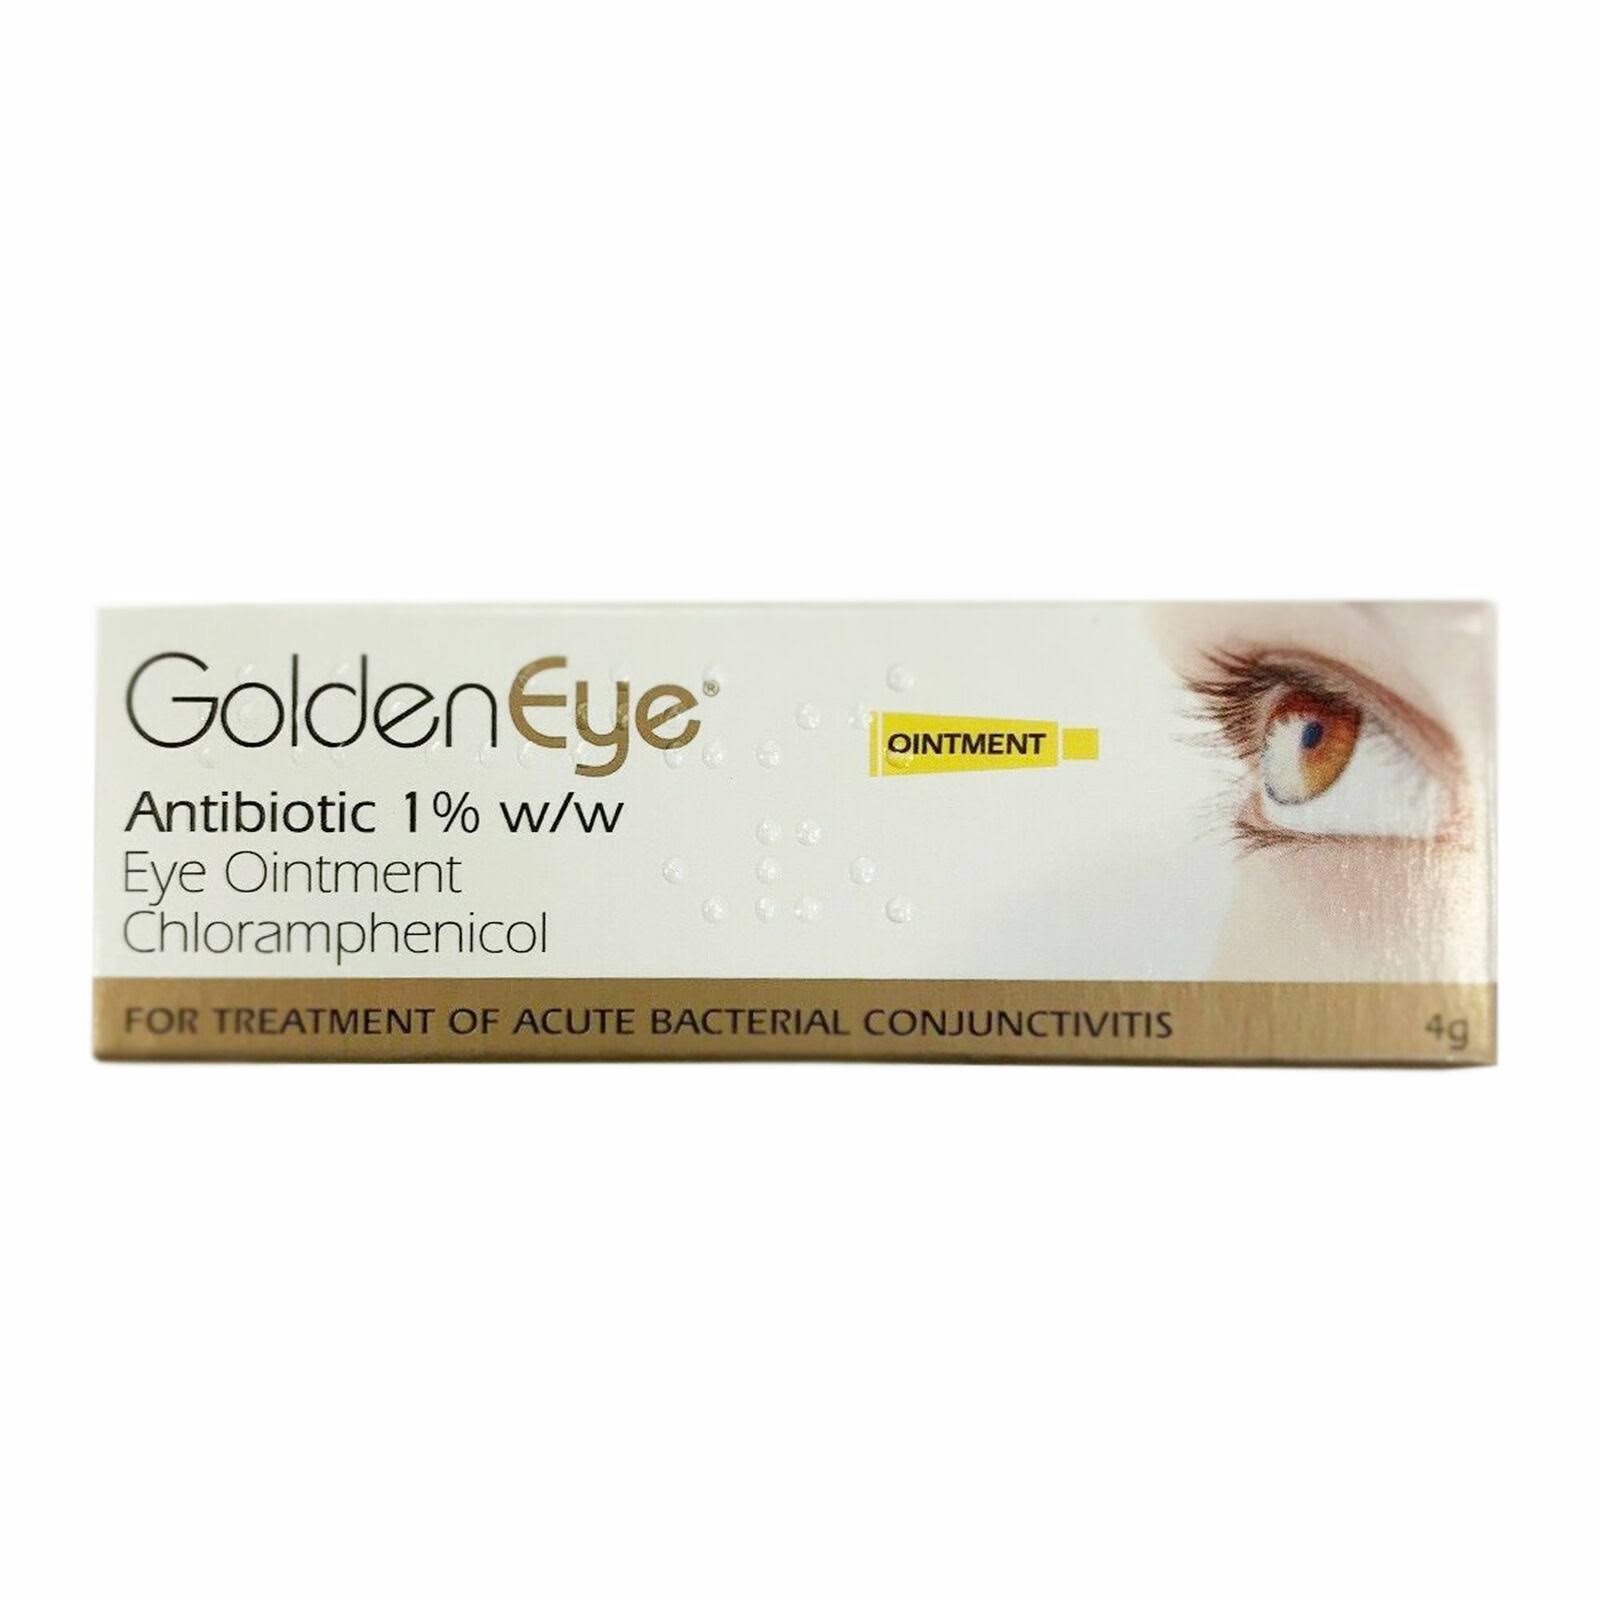 Golden Eye Antibiotic Chloramphenicol Eye Ointment - 4g